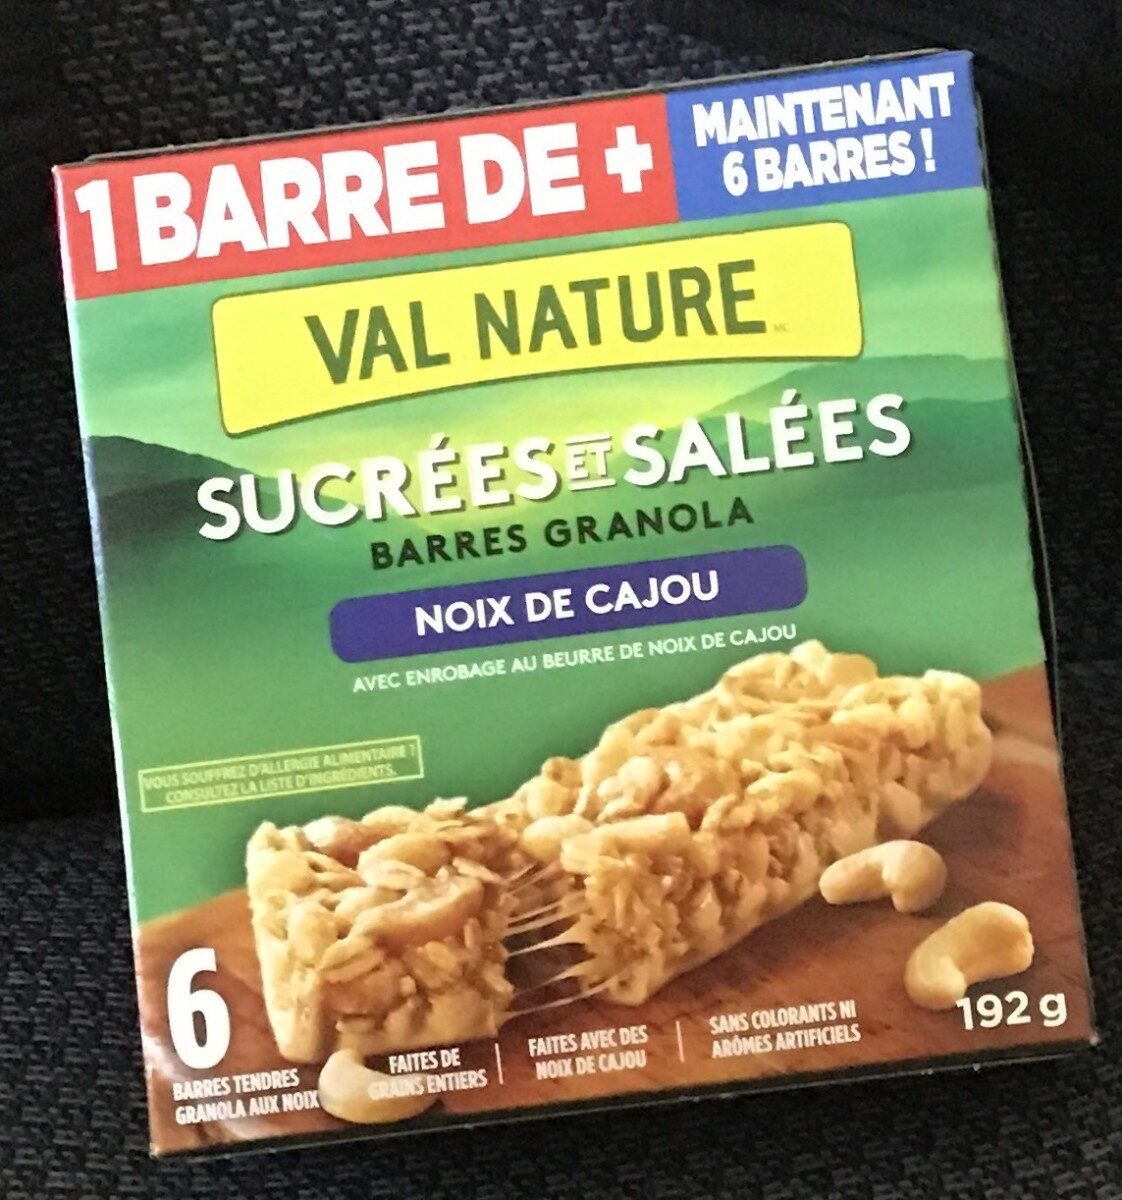 Barres granola - Product - fr